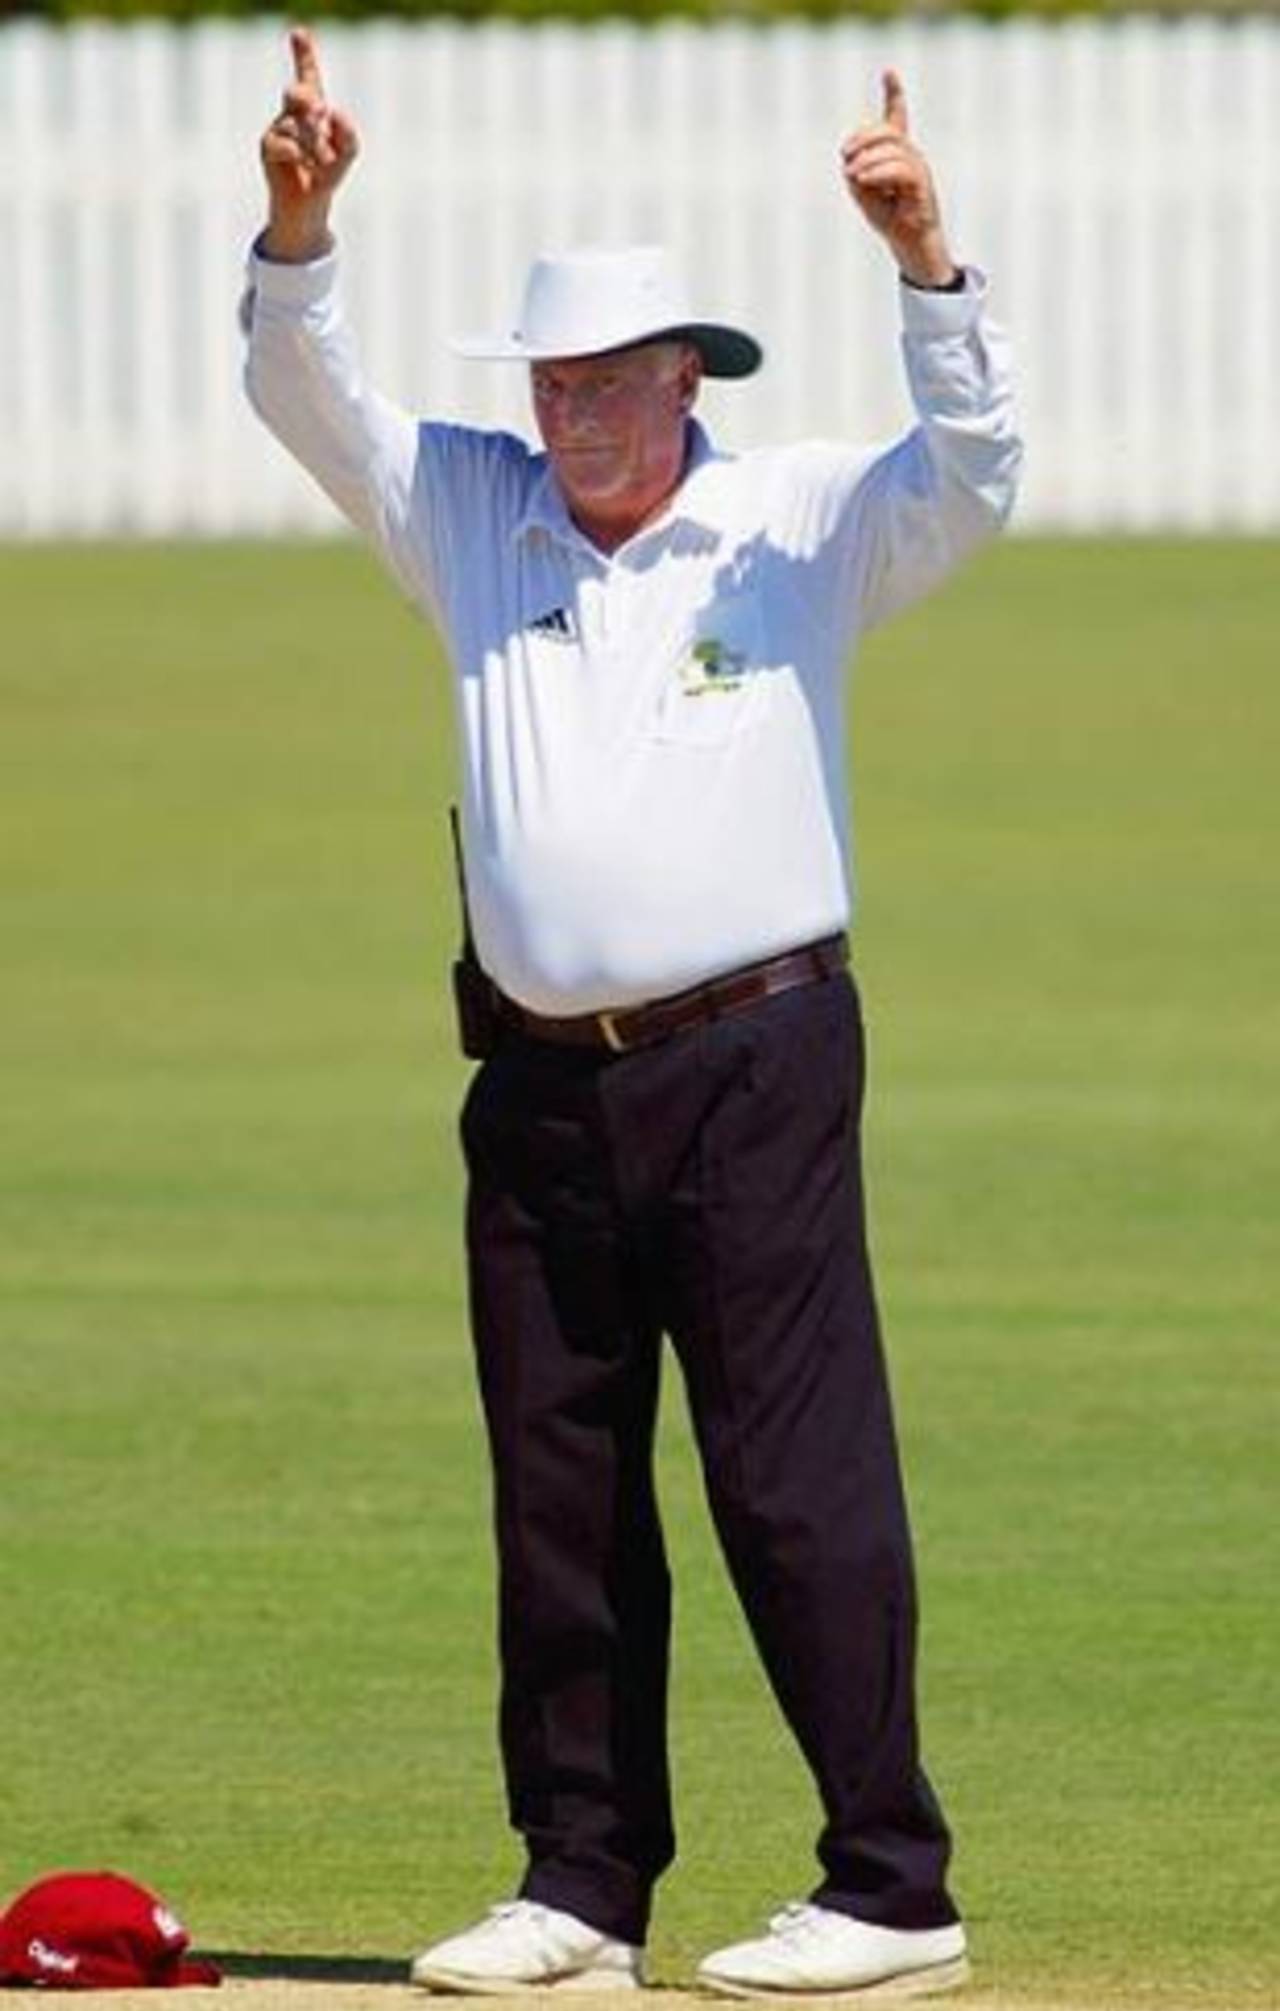 Umpire Dave Orchard signals six runs, Queensland v West Indians, Allan Border Field, Brisbane, 1st day, October 27, 2005